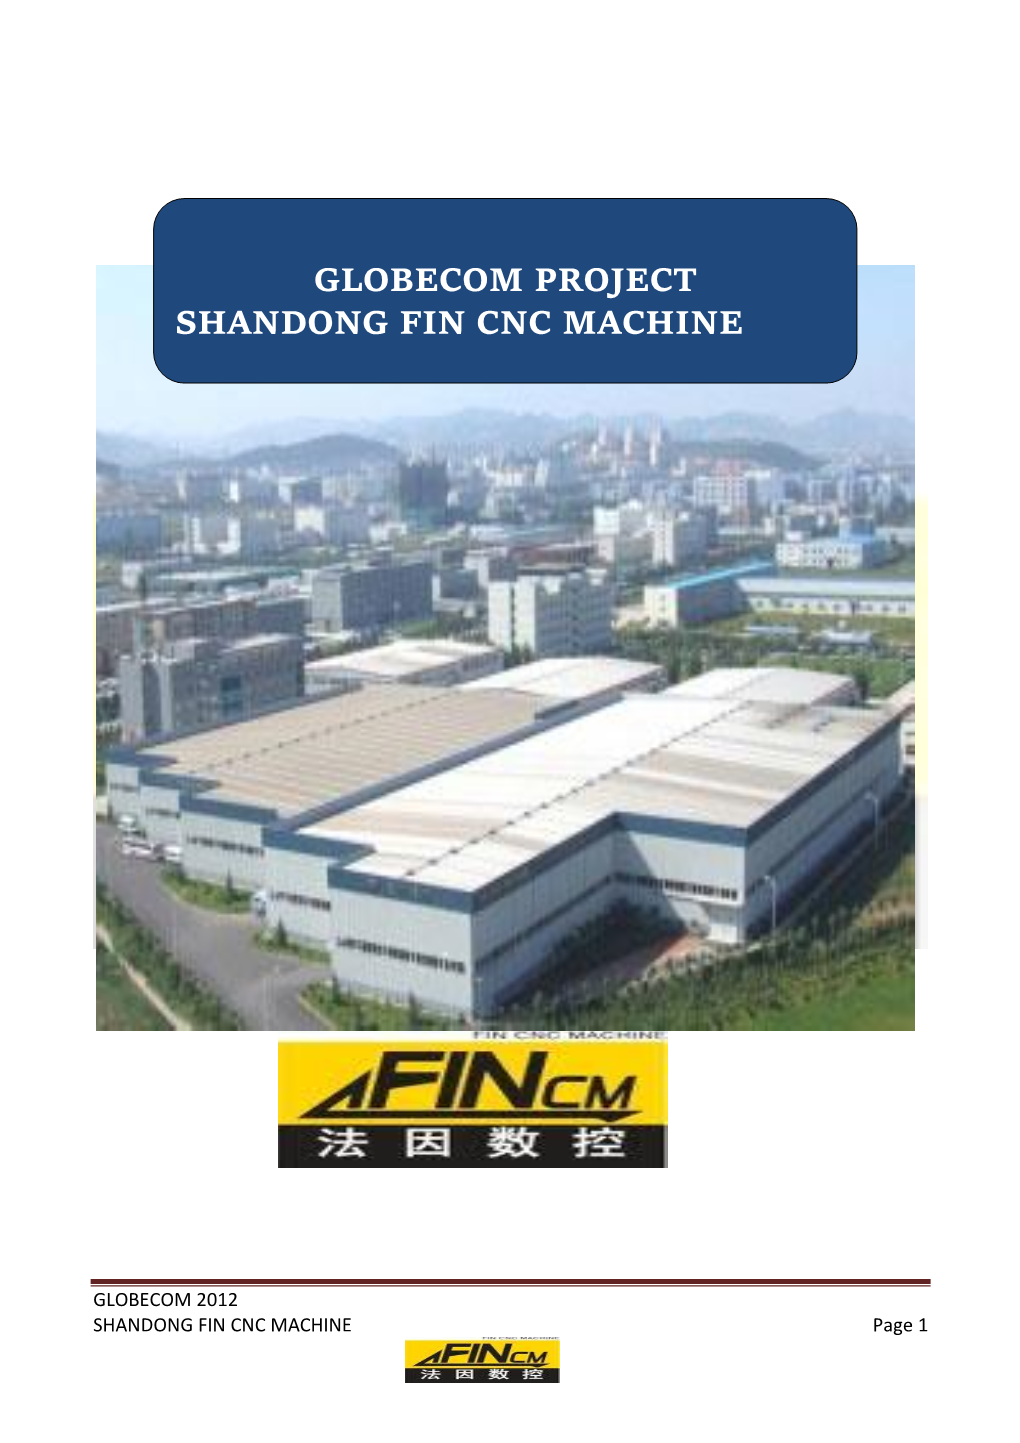 Globecom Project Shandong Fin Cnc Machine